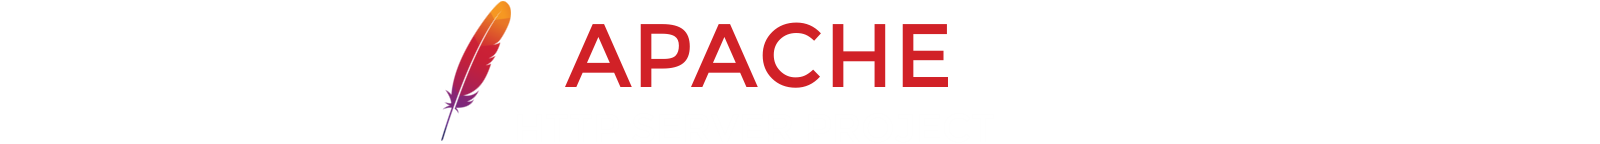 apache web server presentation